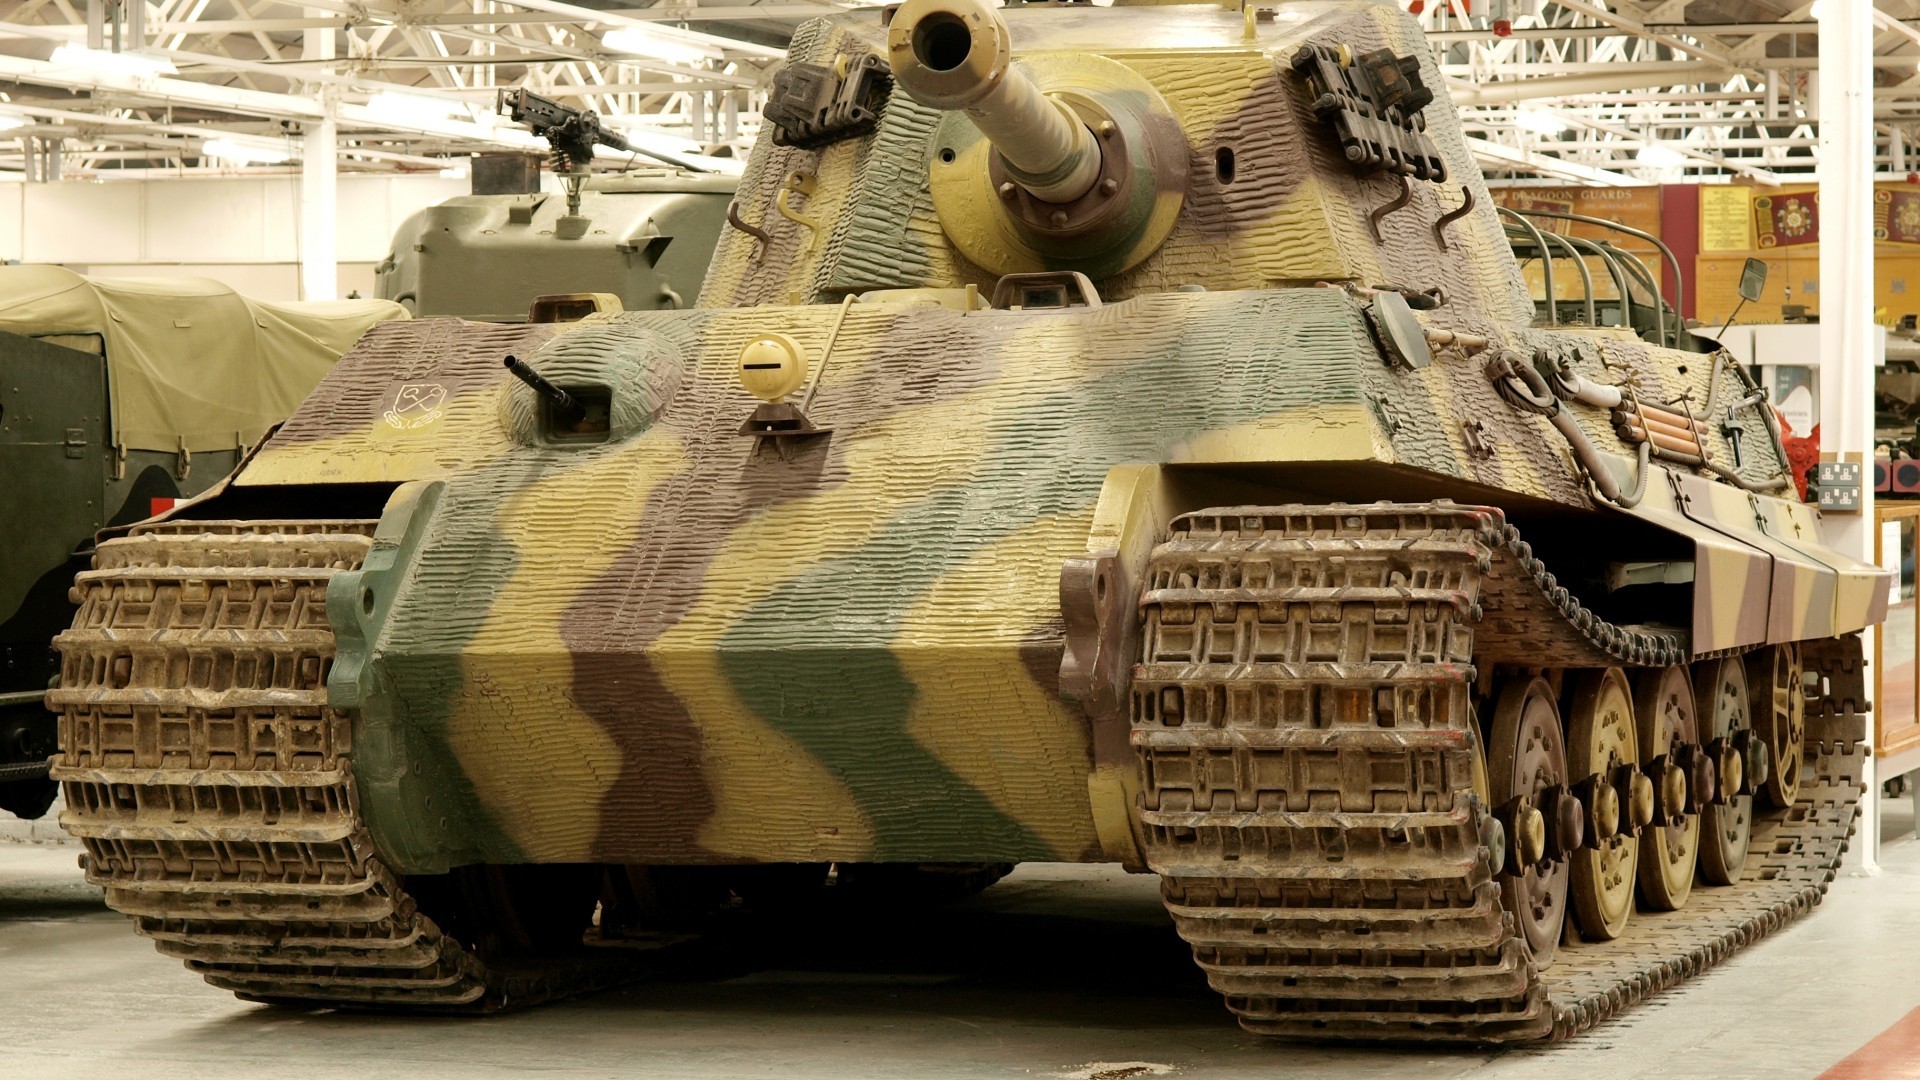 General 1920x1080 Tiger II military World War II tank military vehicle camouflage vehicle German tanks